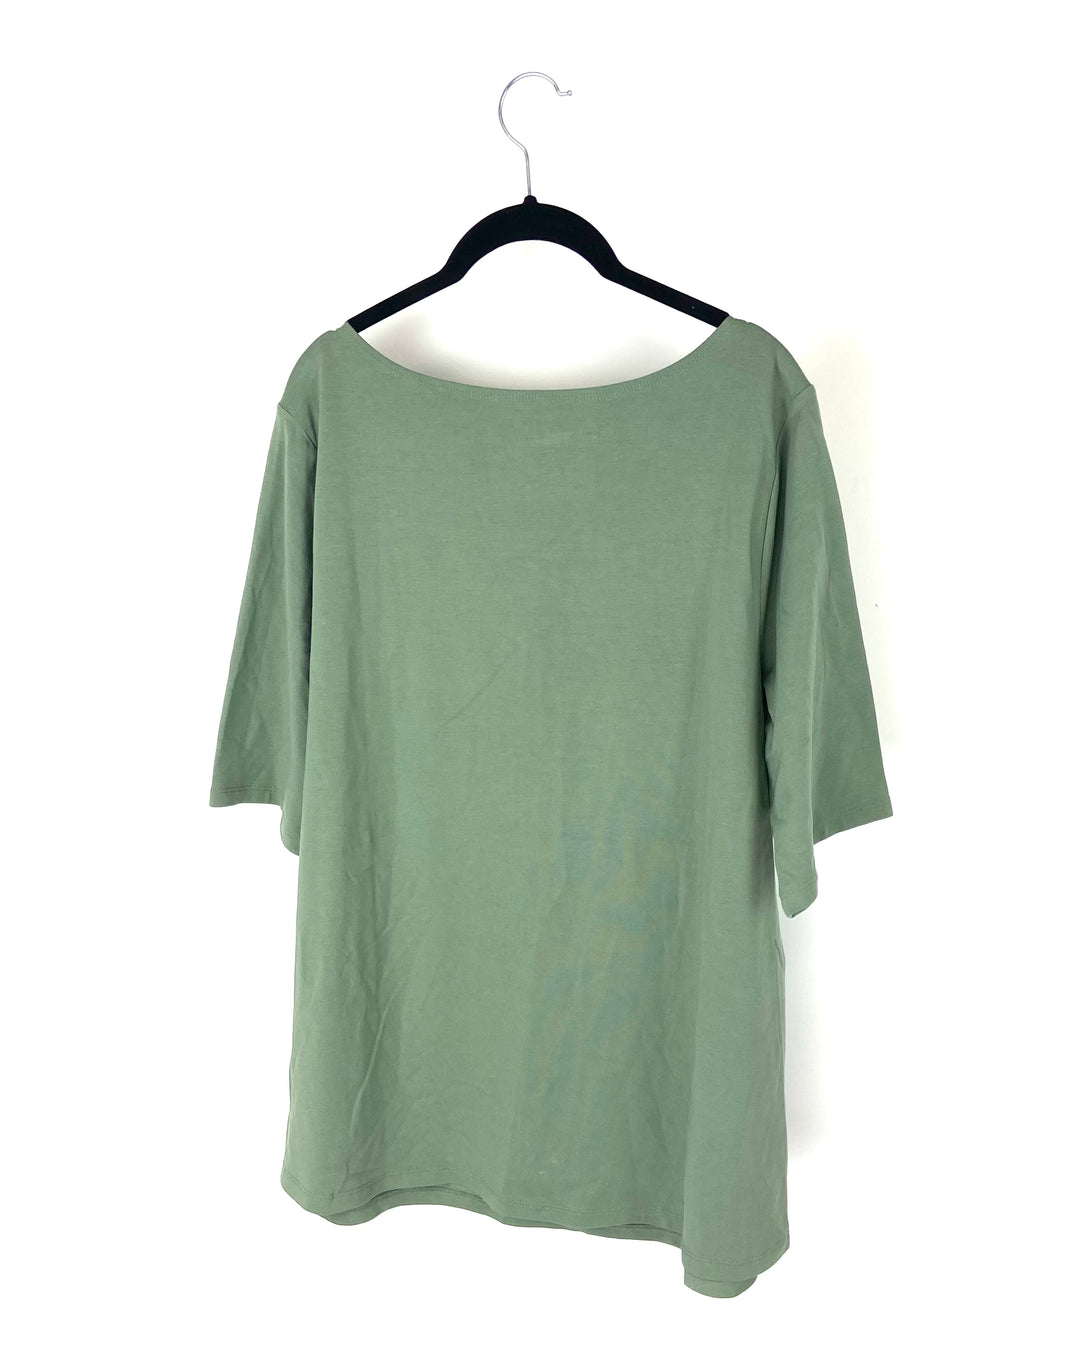 Olive Green T-Shirt - Large/Extra Large